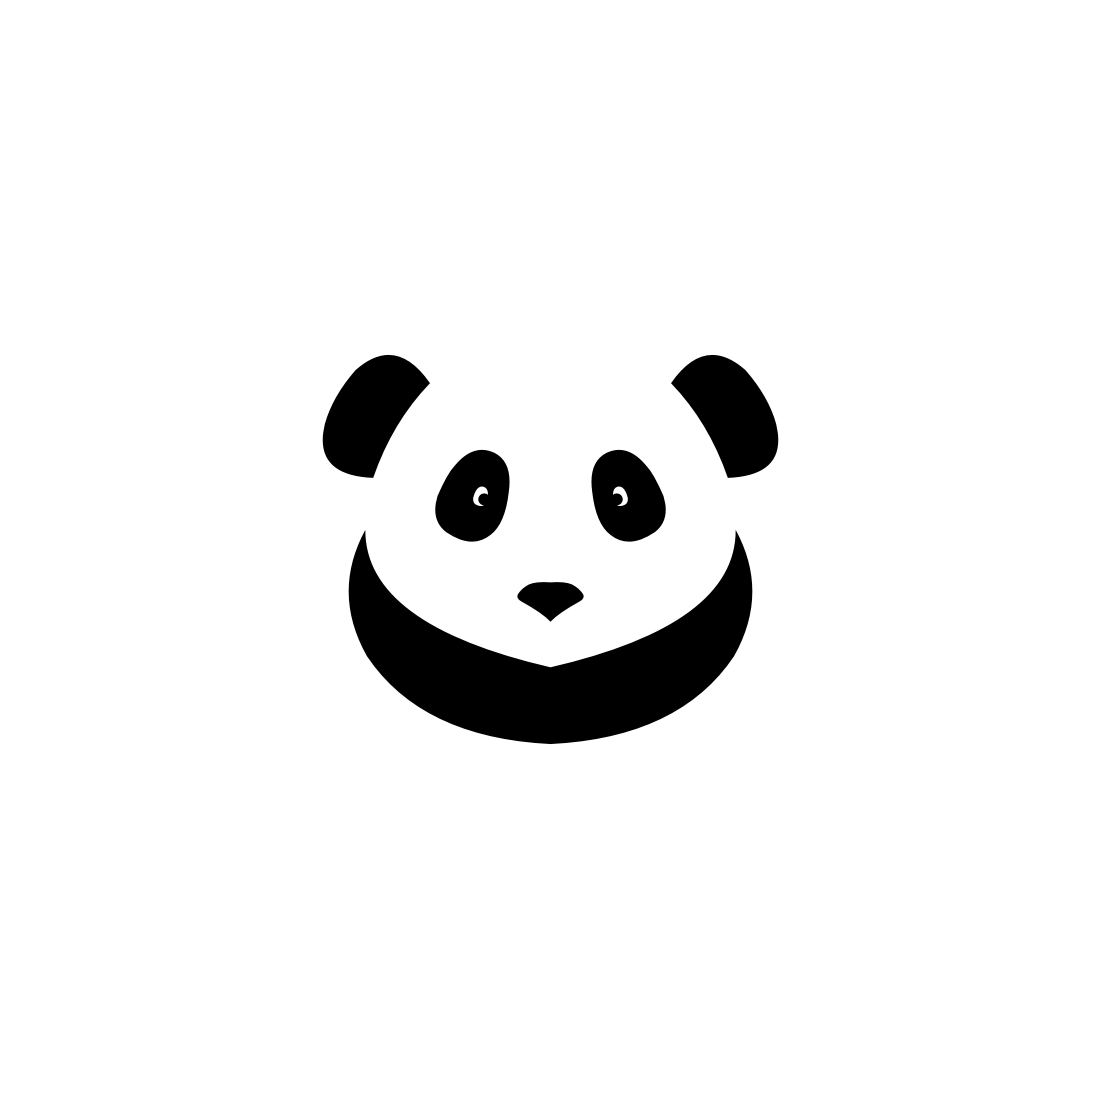 Panda Head Logo Vector Design main cover image.